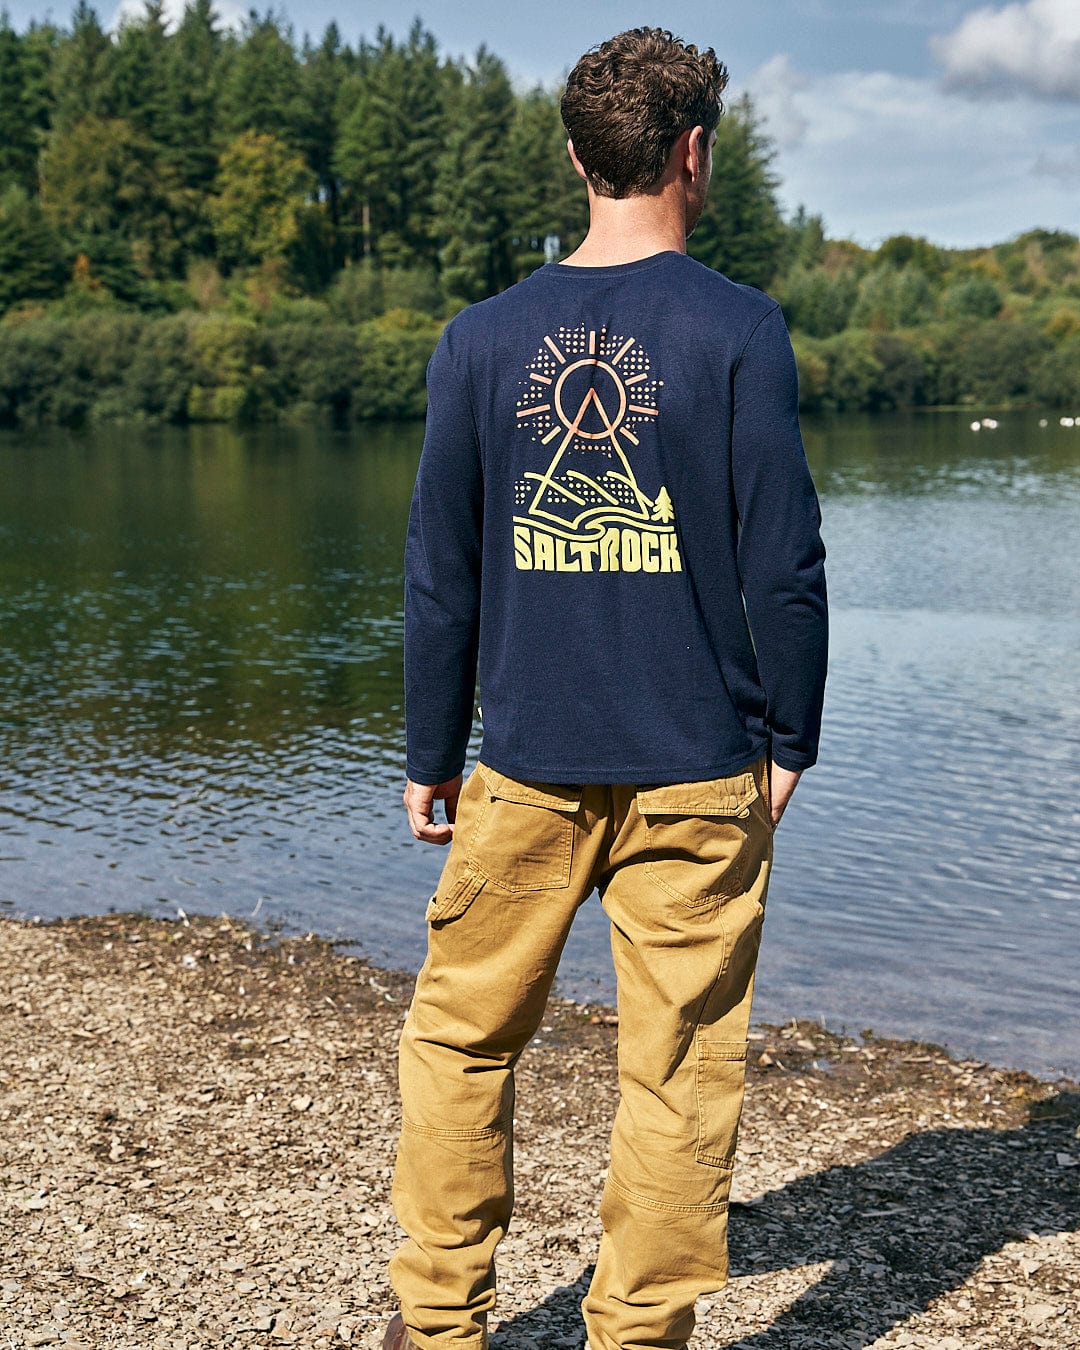 A man standing by a lake wearing a Saltrock Geo Peak - Mens Long Sleeve T-Shirt - Dark Blue.